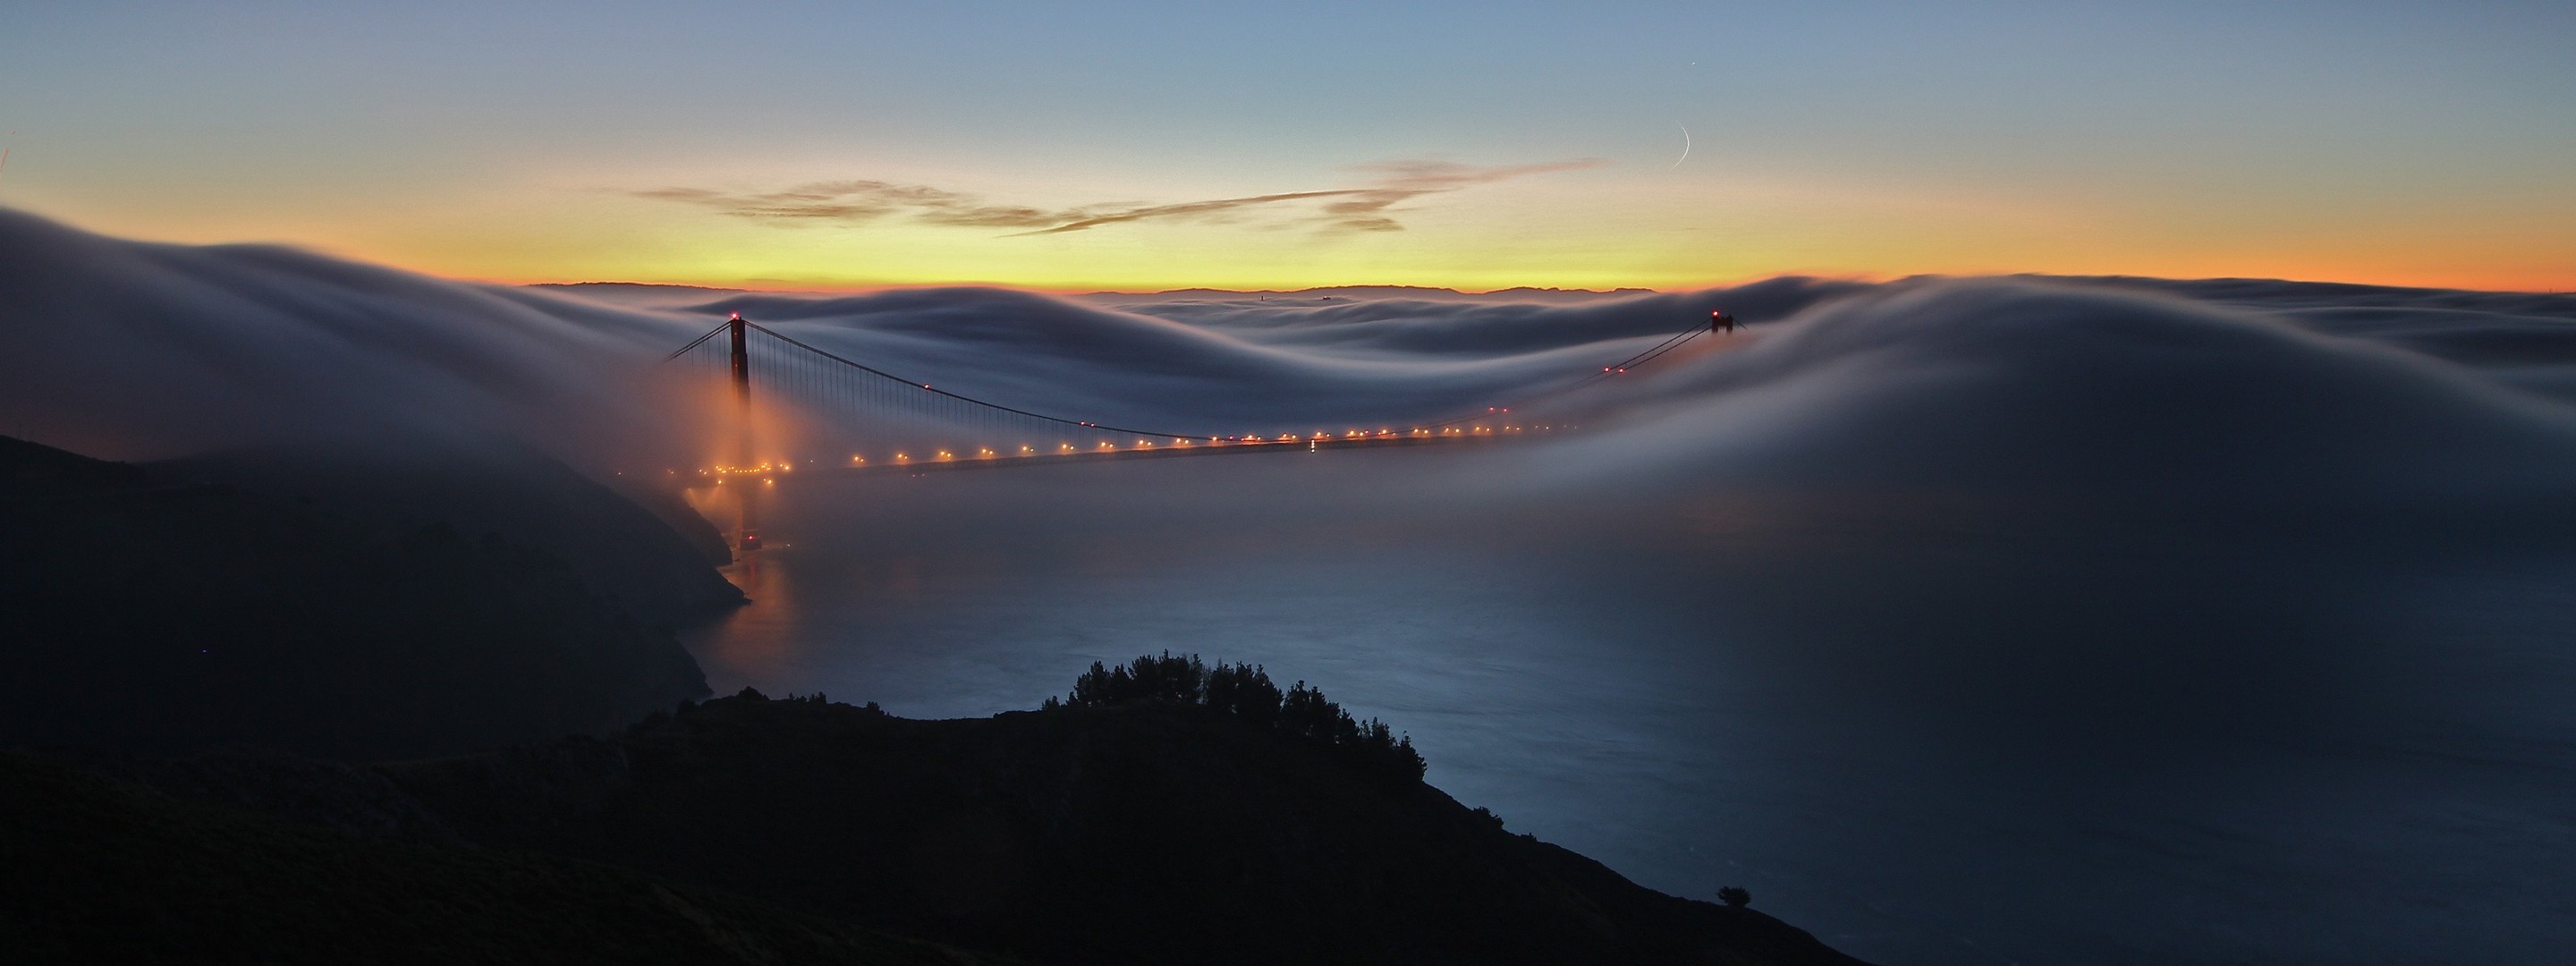 General 2880x1080 San Francisco Golden Gate Bridge mist clouds bay USA